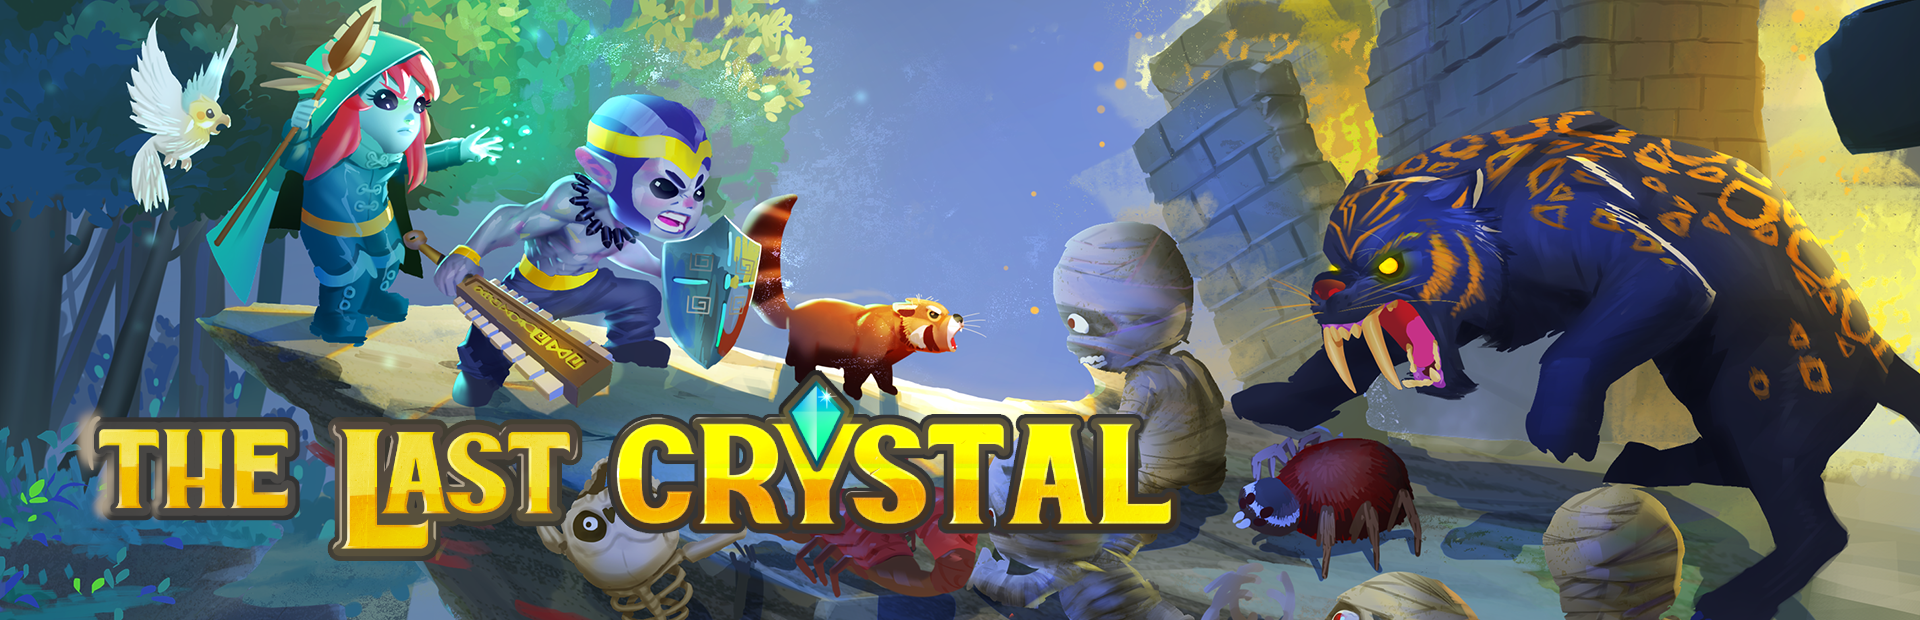 The Last Crystal Co-op Adventure - Demo